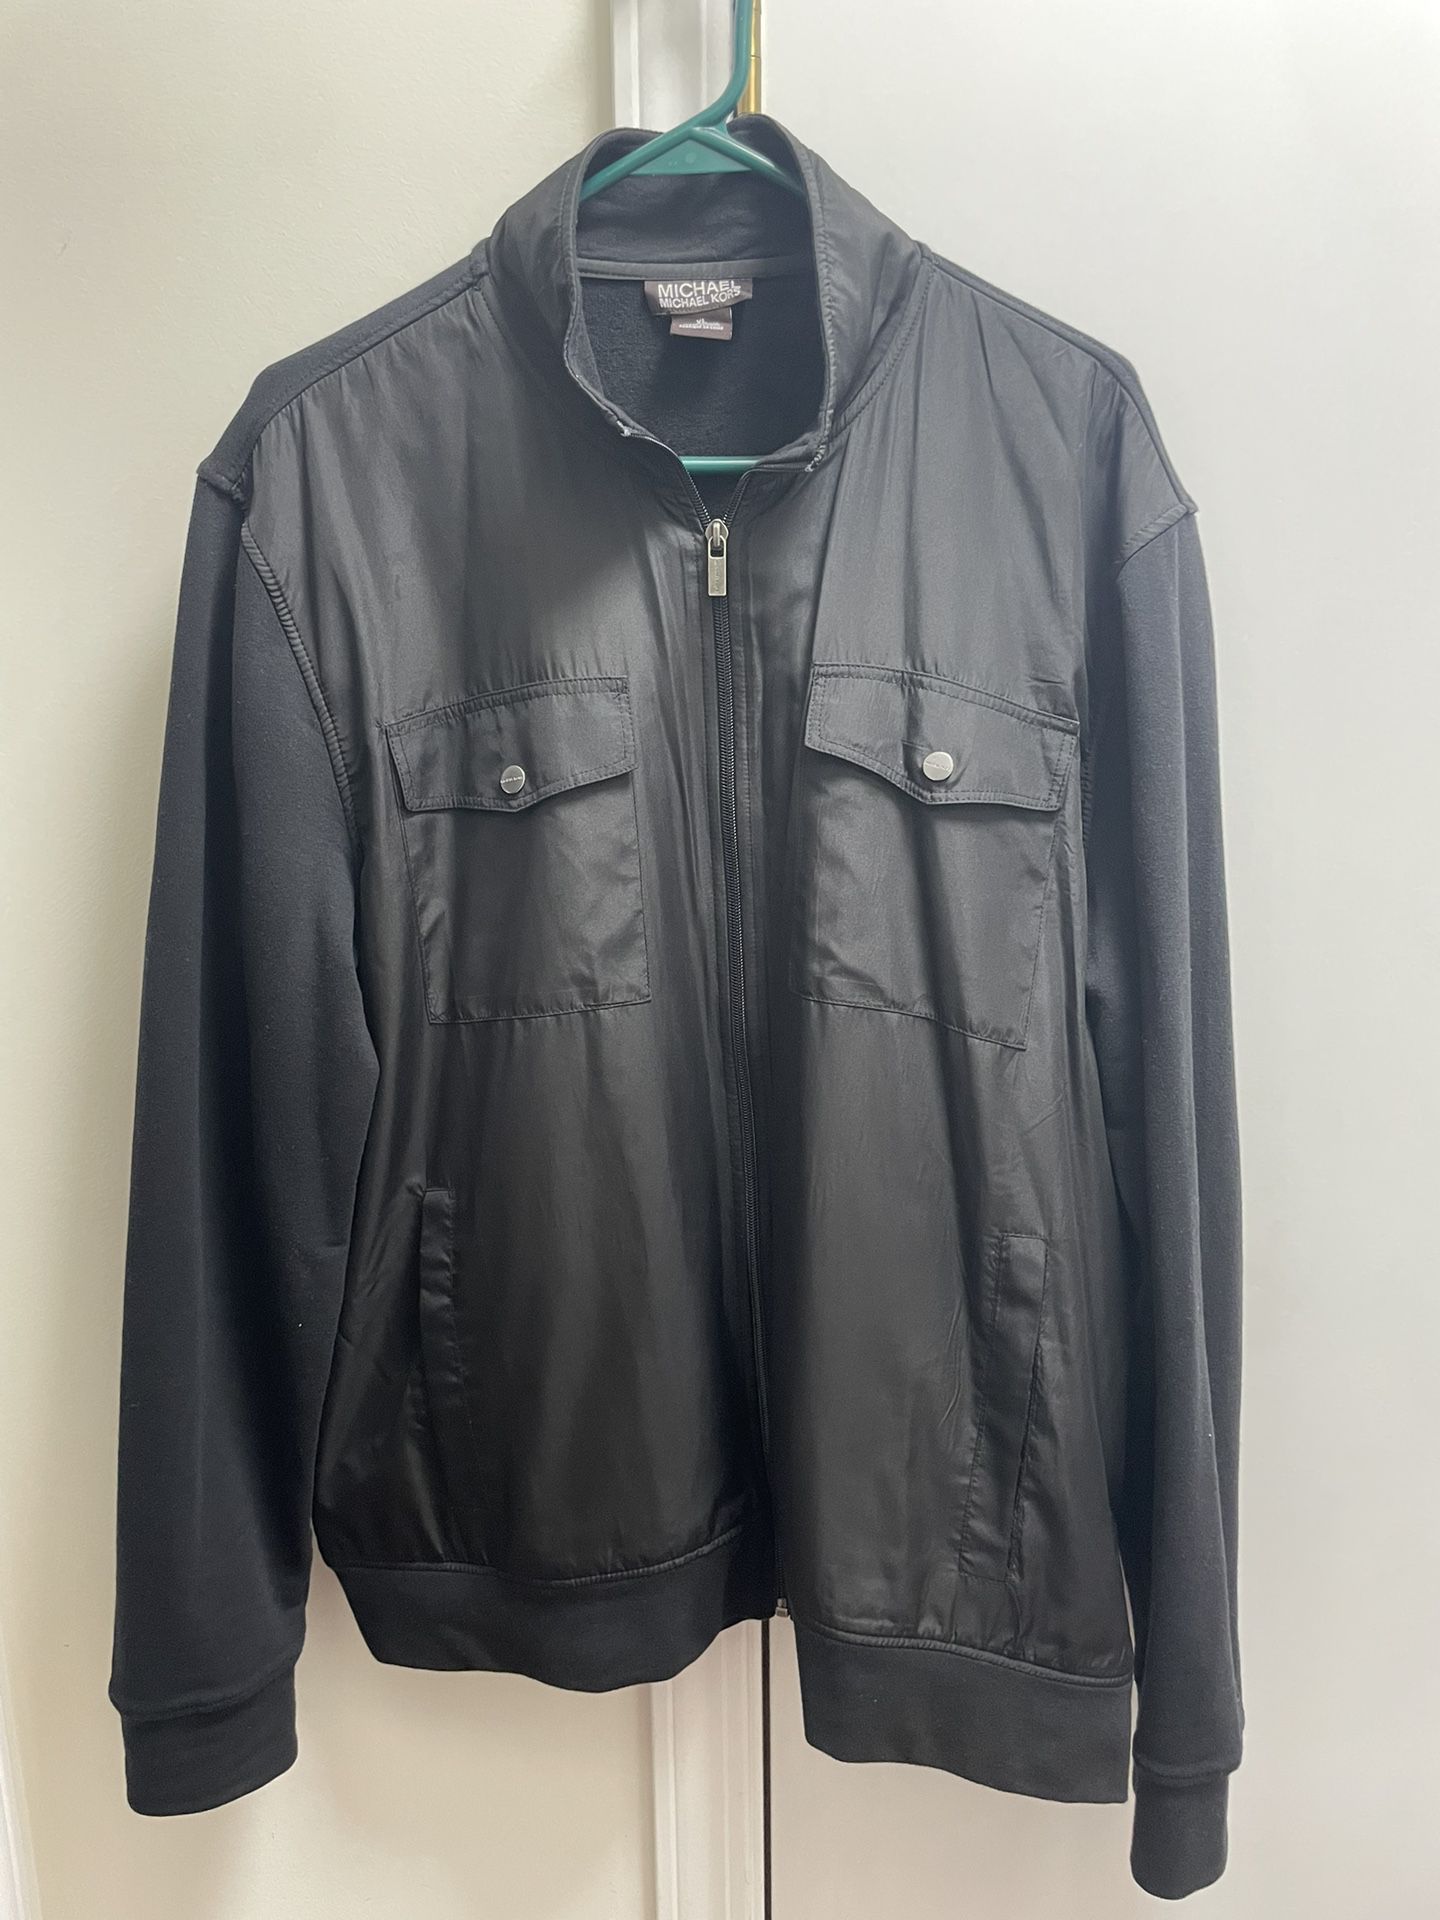 Men’s Michael Kors Black Full Zip Jacket Size XL